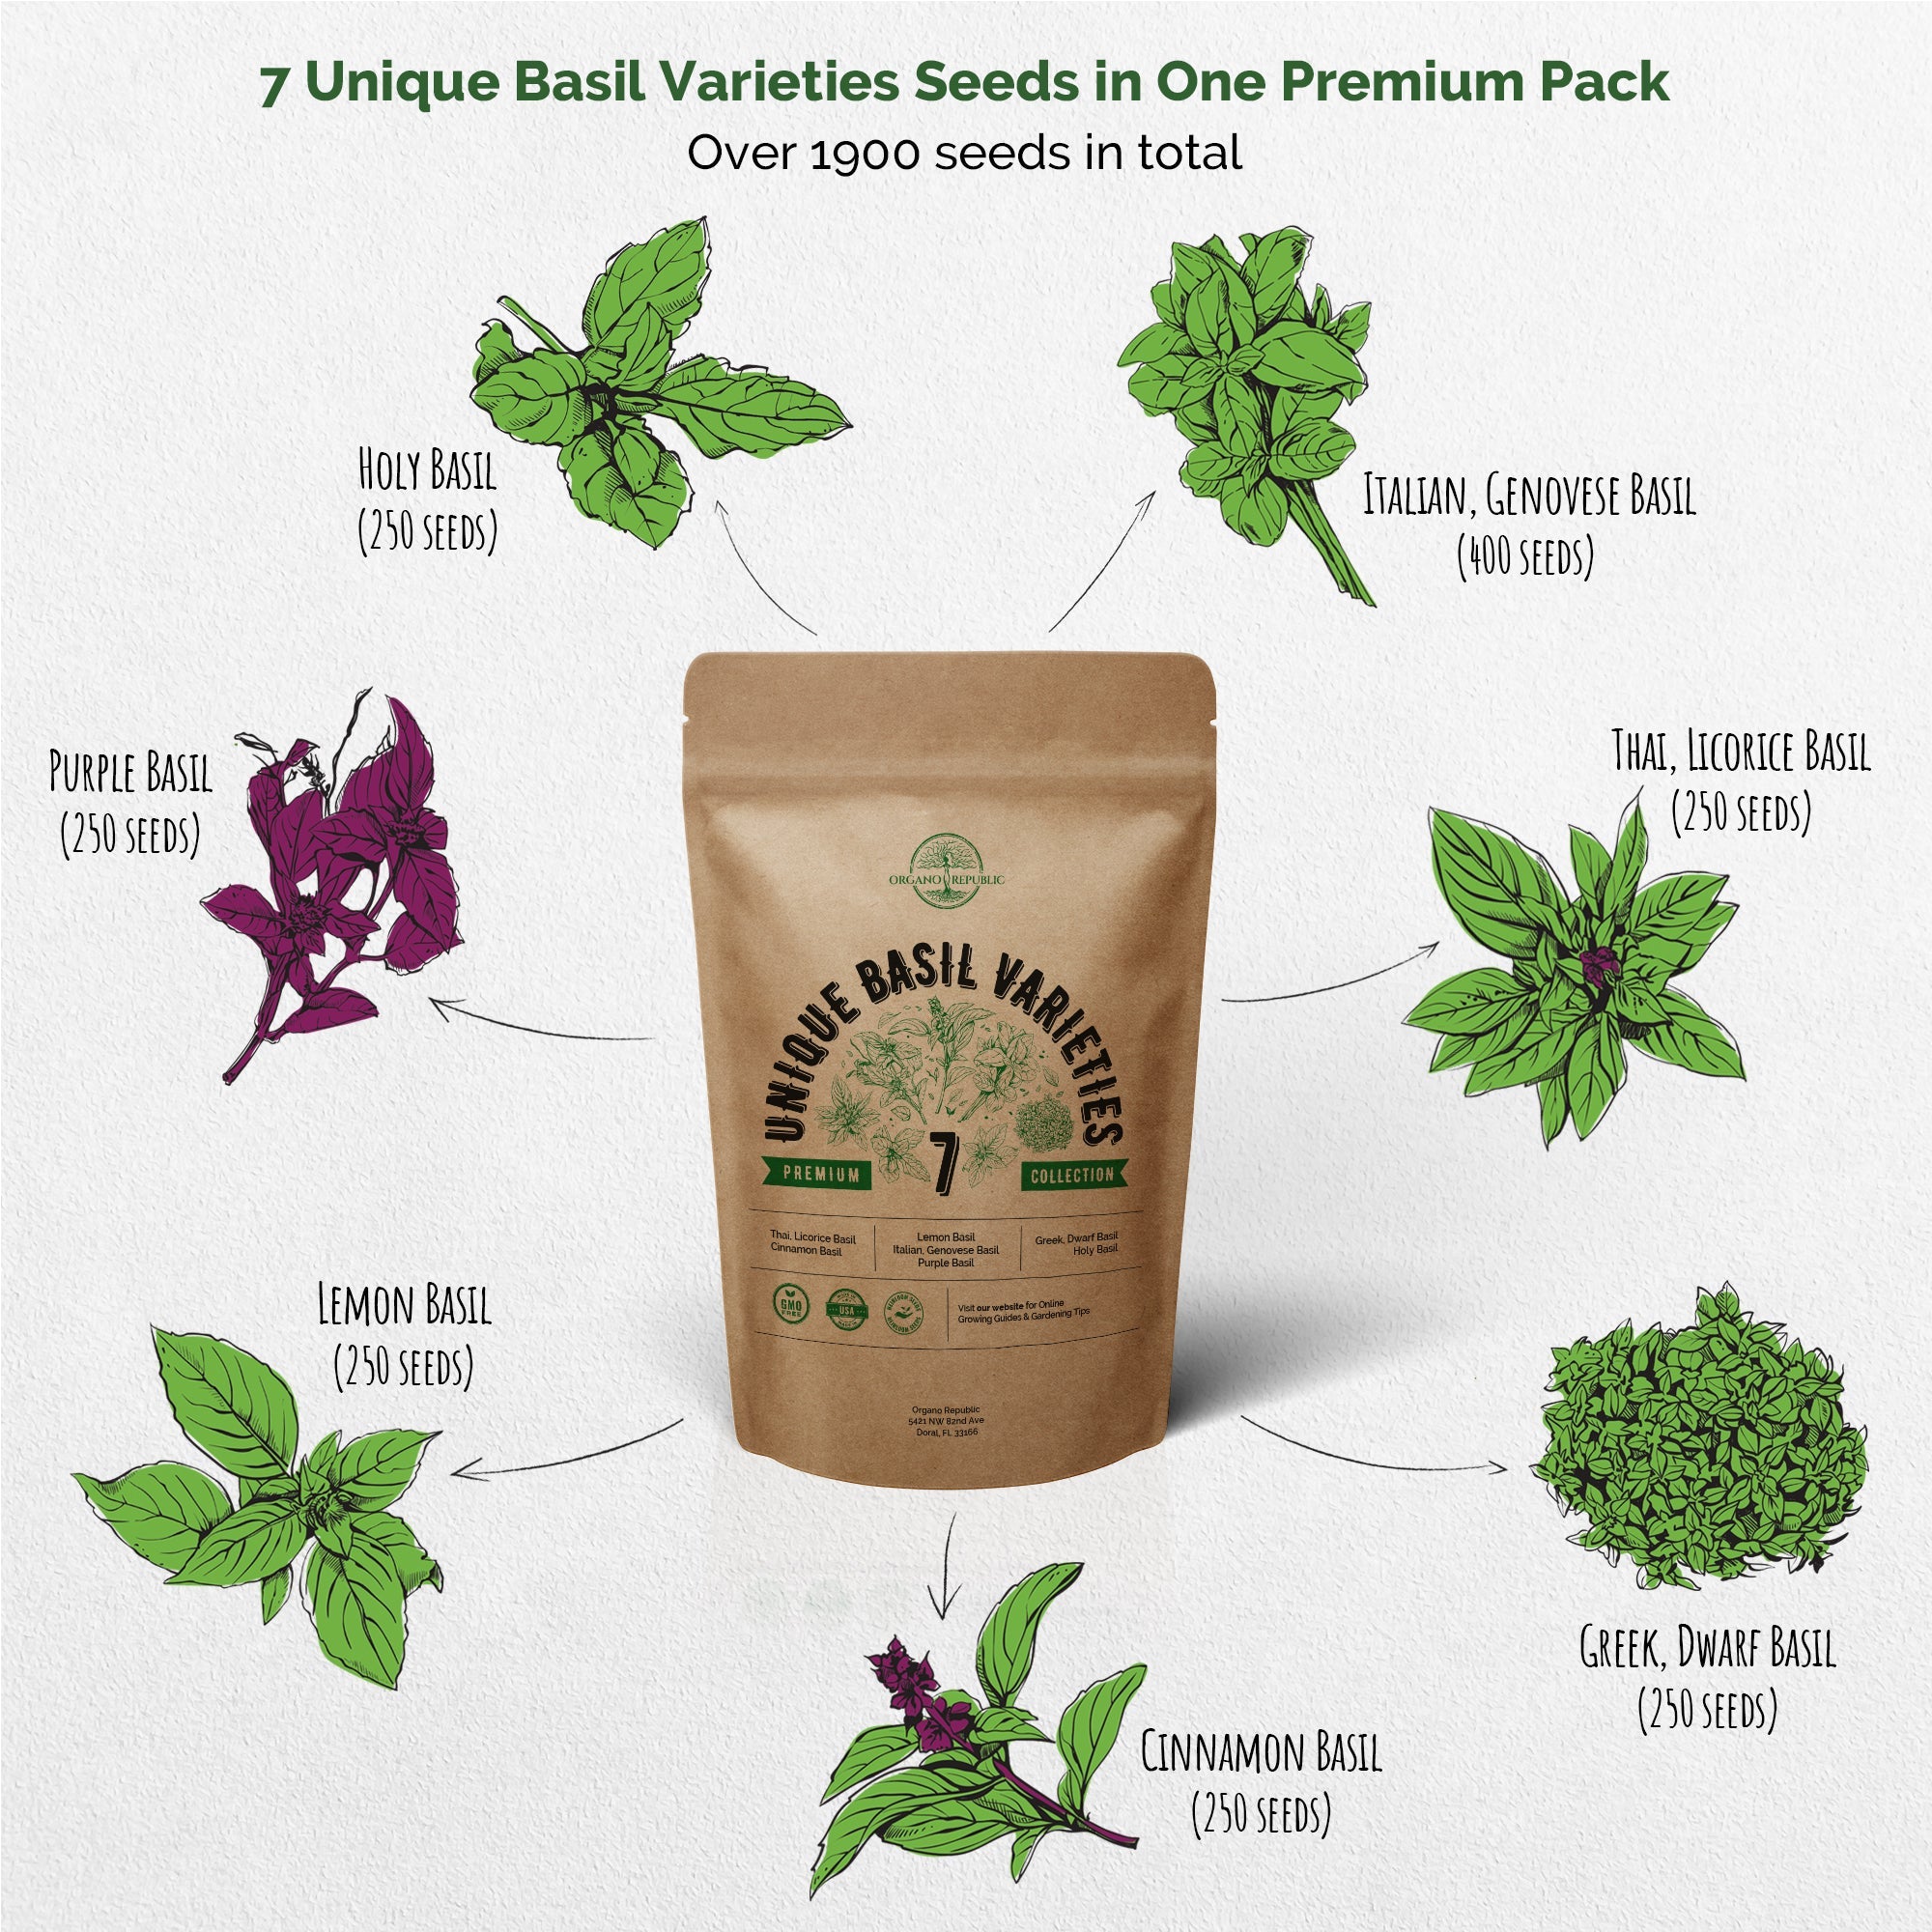 Herb Seeds Variety Pack - 7 Unique Basil Varieties Seeds Pack - Over 1900 Non-GMO, Heirloom Seeds